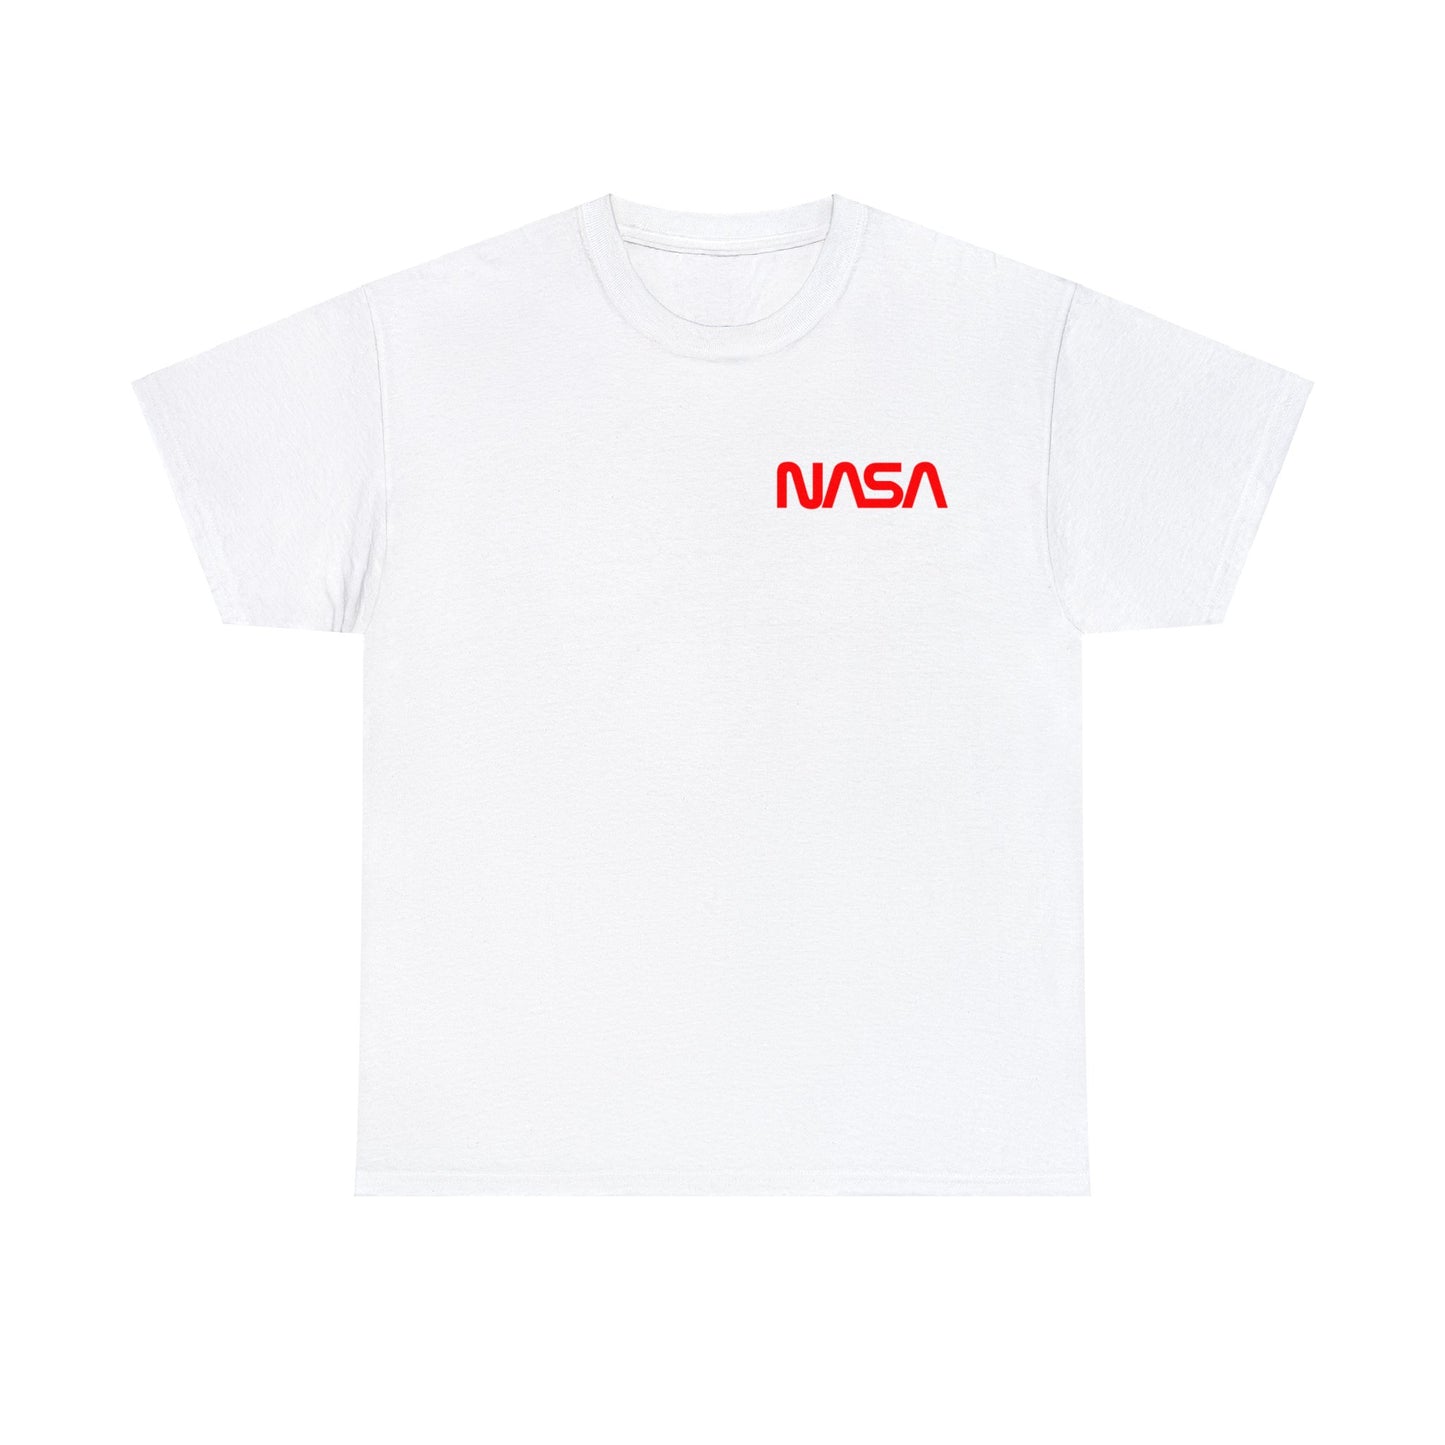 TOM SACHS NASA A Space Program T-shirt for Sale